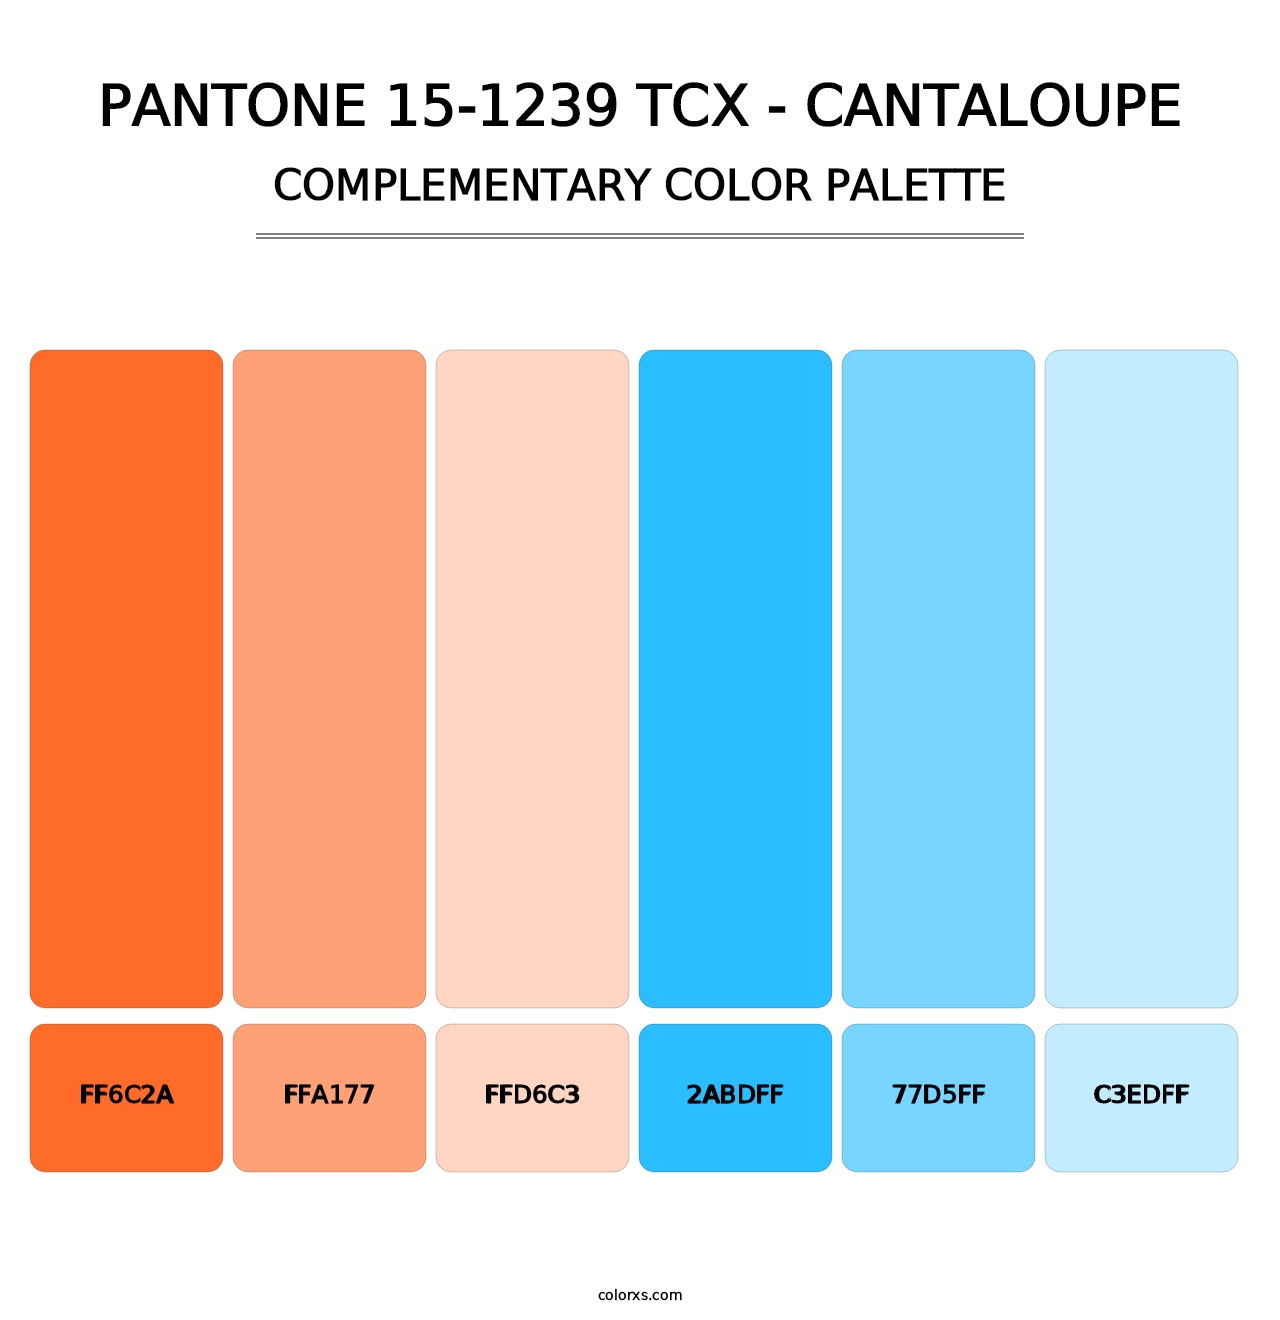 PANTONE 15-1239 TCX - Cantaloupe - Complementary Color Palette